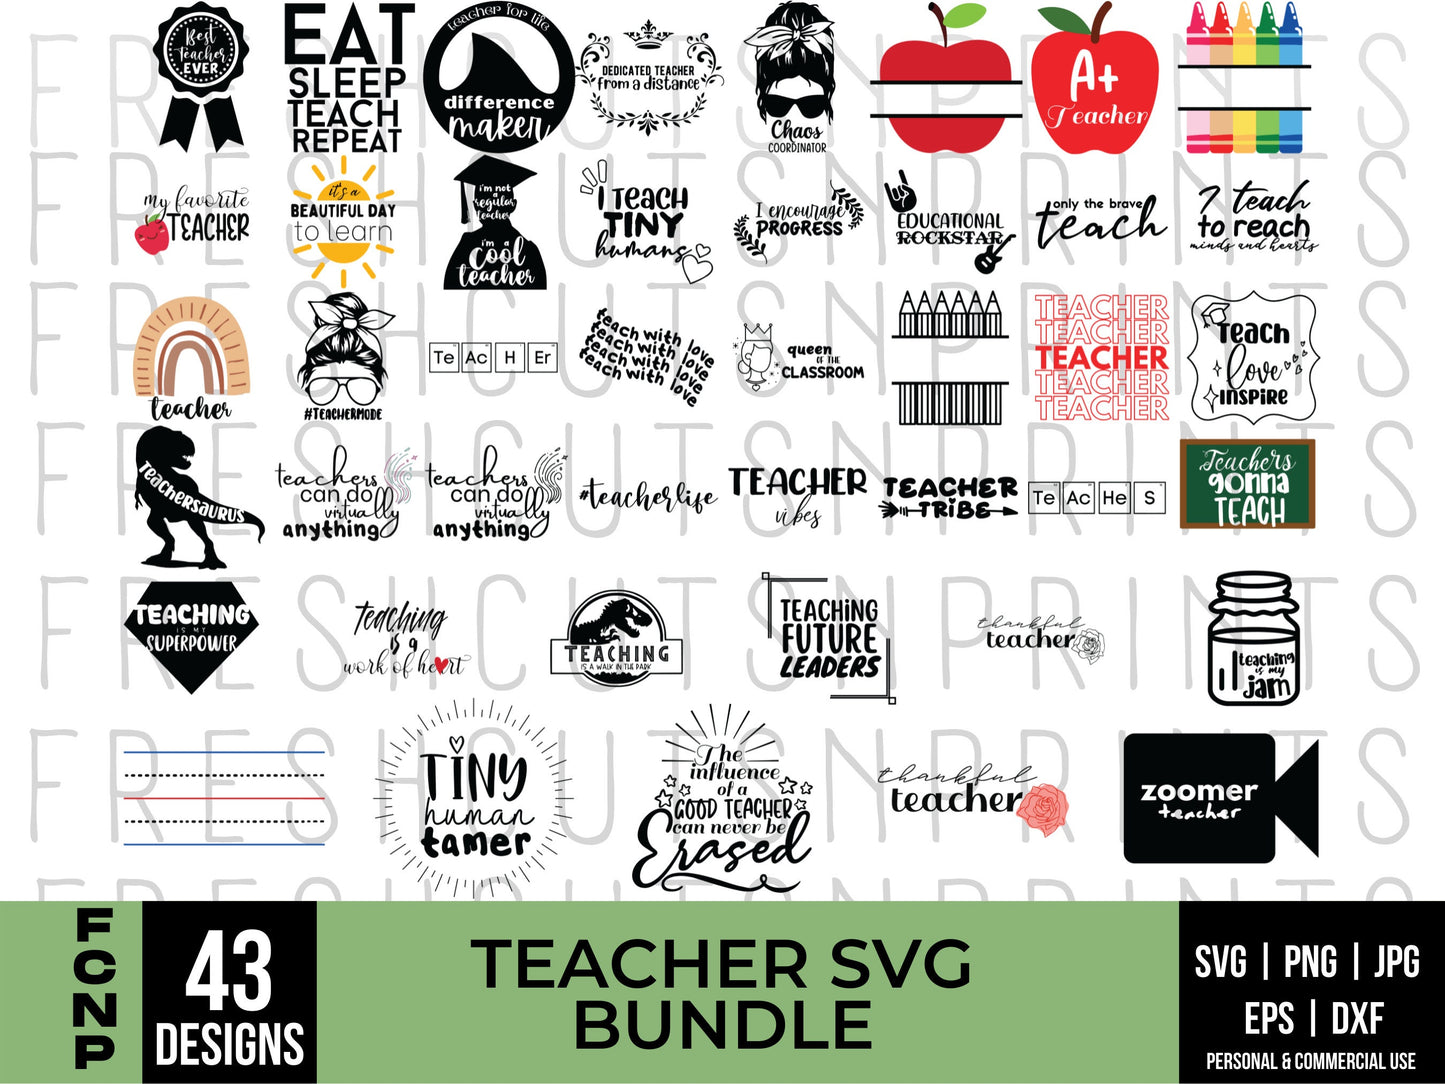 Teacher Keychain SVG Vector Illustrations